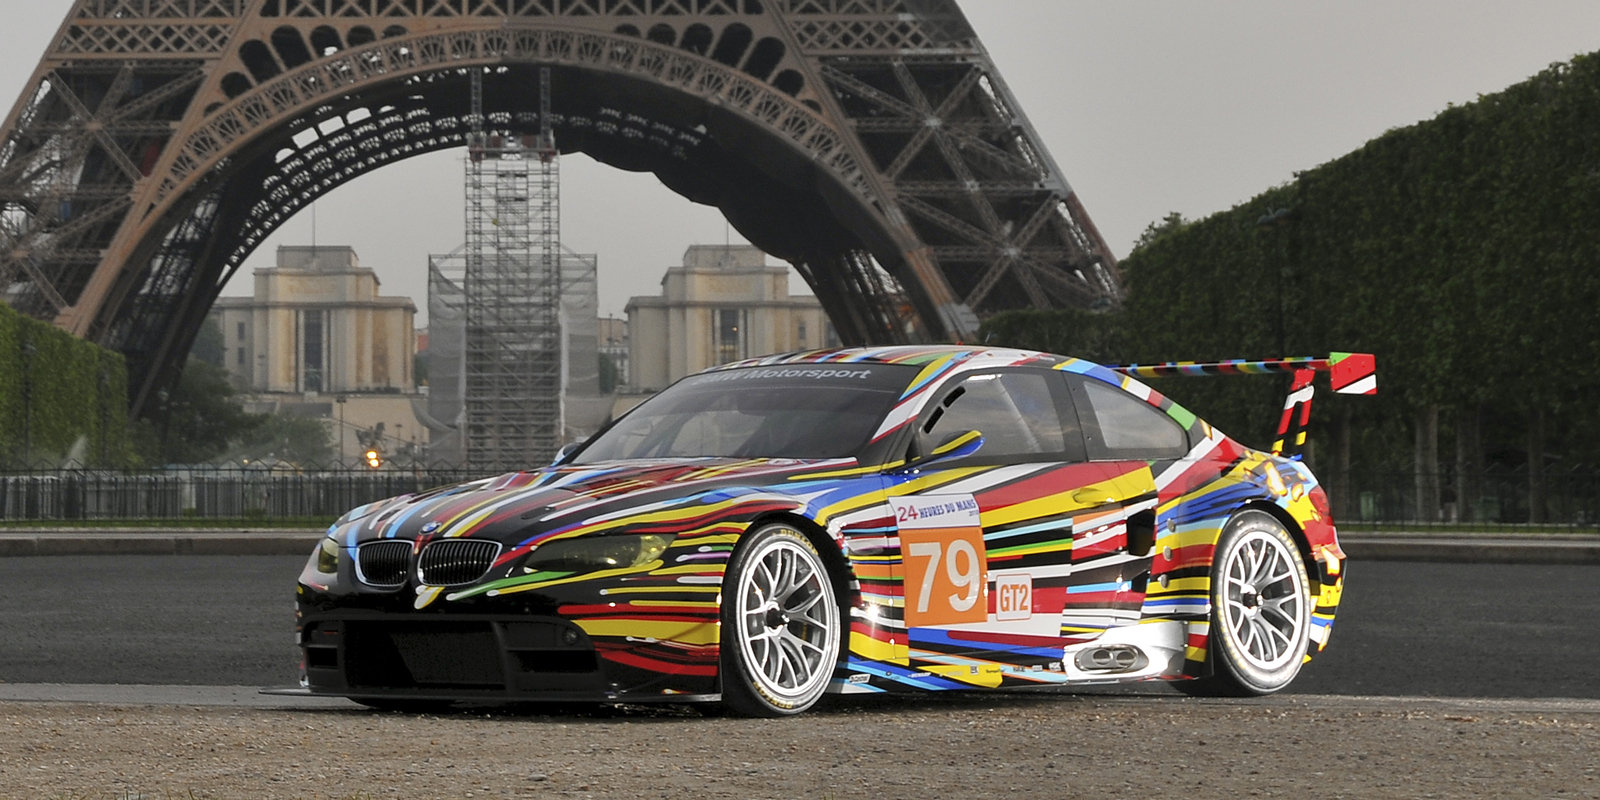 BMW-M3-GT2-Art-Car-Presentation-jeff-koon-s2_header1600x800.jpg